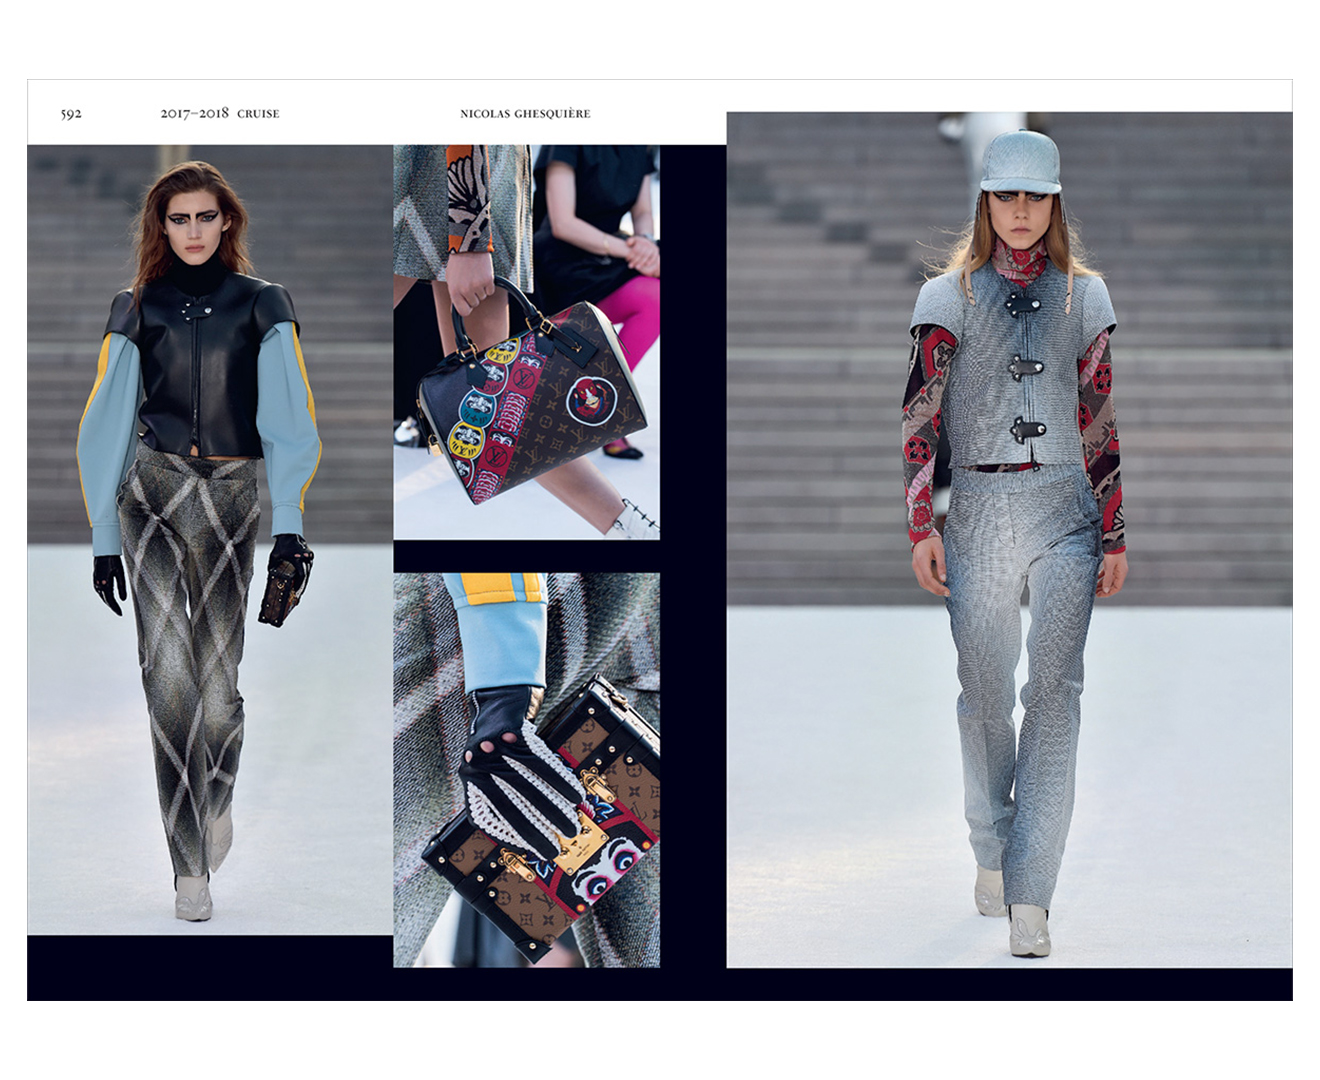 Louis Vuitton: The Complete Fashion Collections (Catwalk): Ellison, Jo,  Rytter, Louise: 9780300233360: : Books